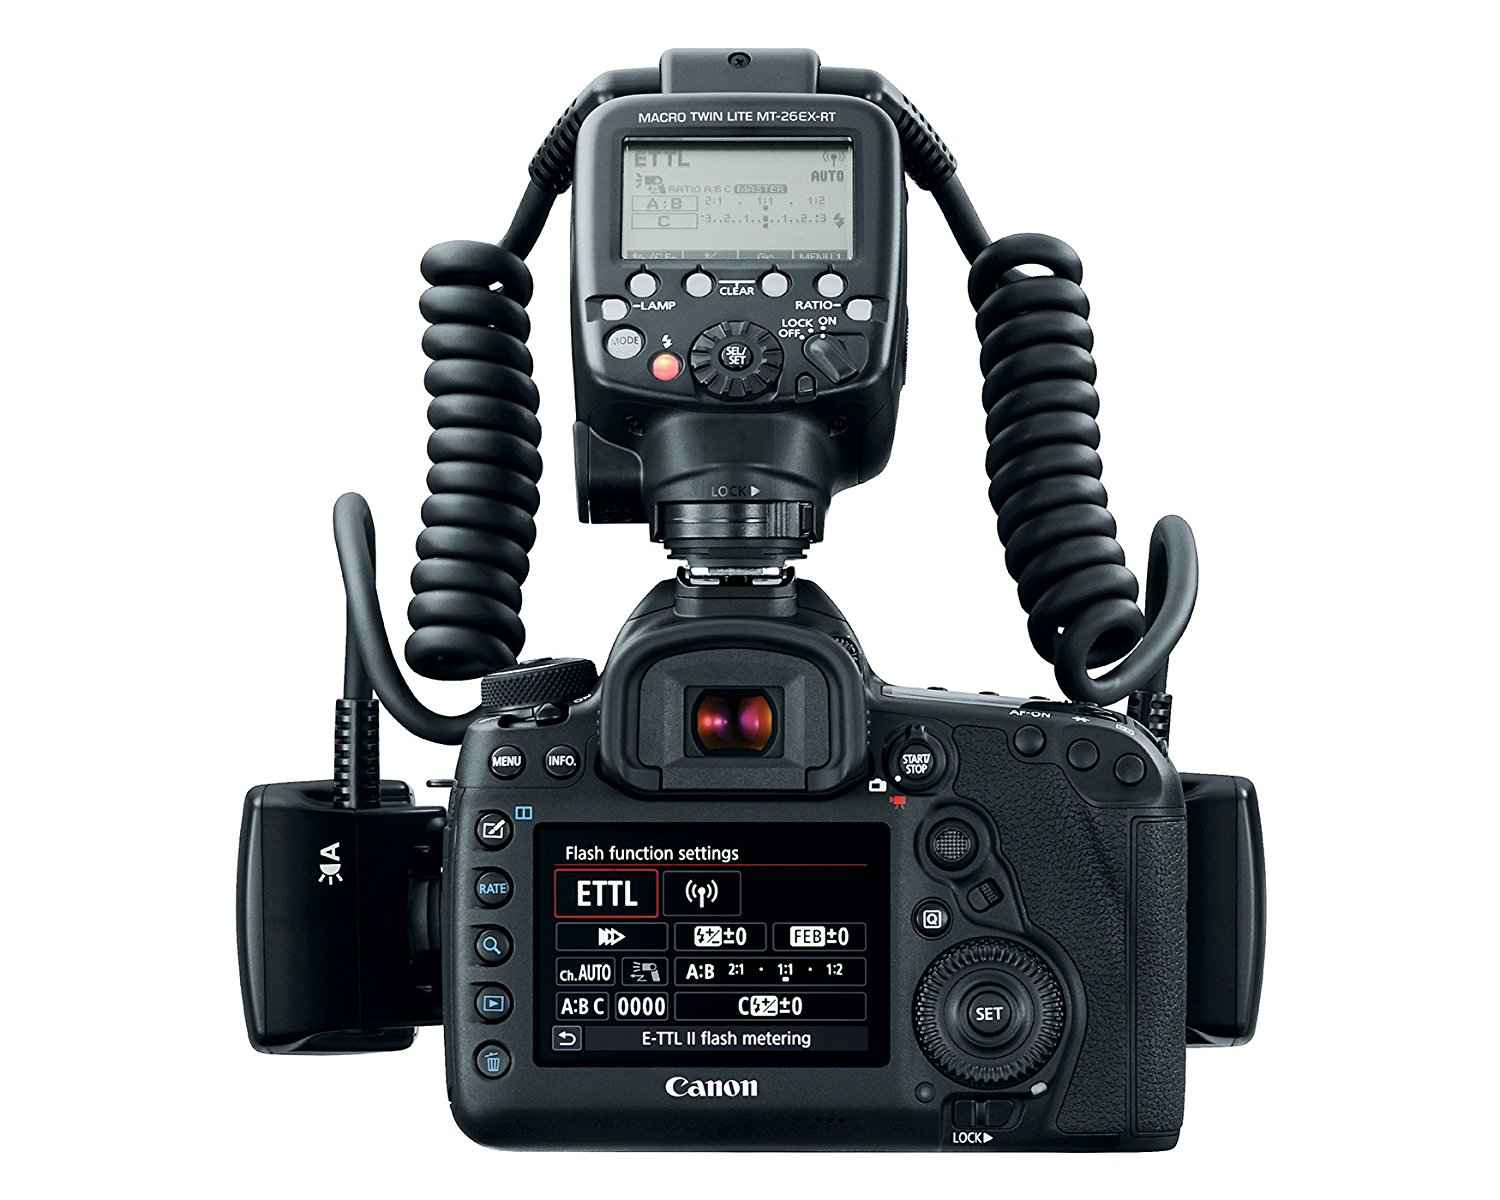 Canon Macro Twin-Lite MT-26EX-RT Flash